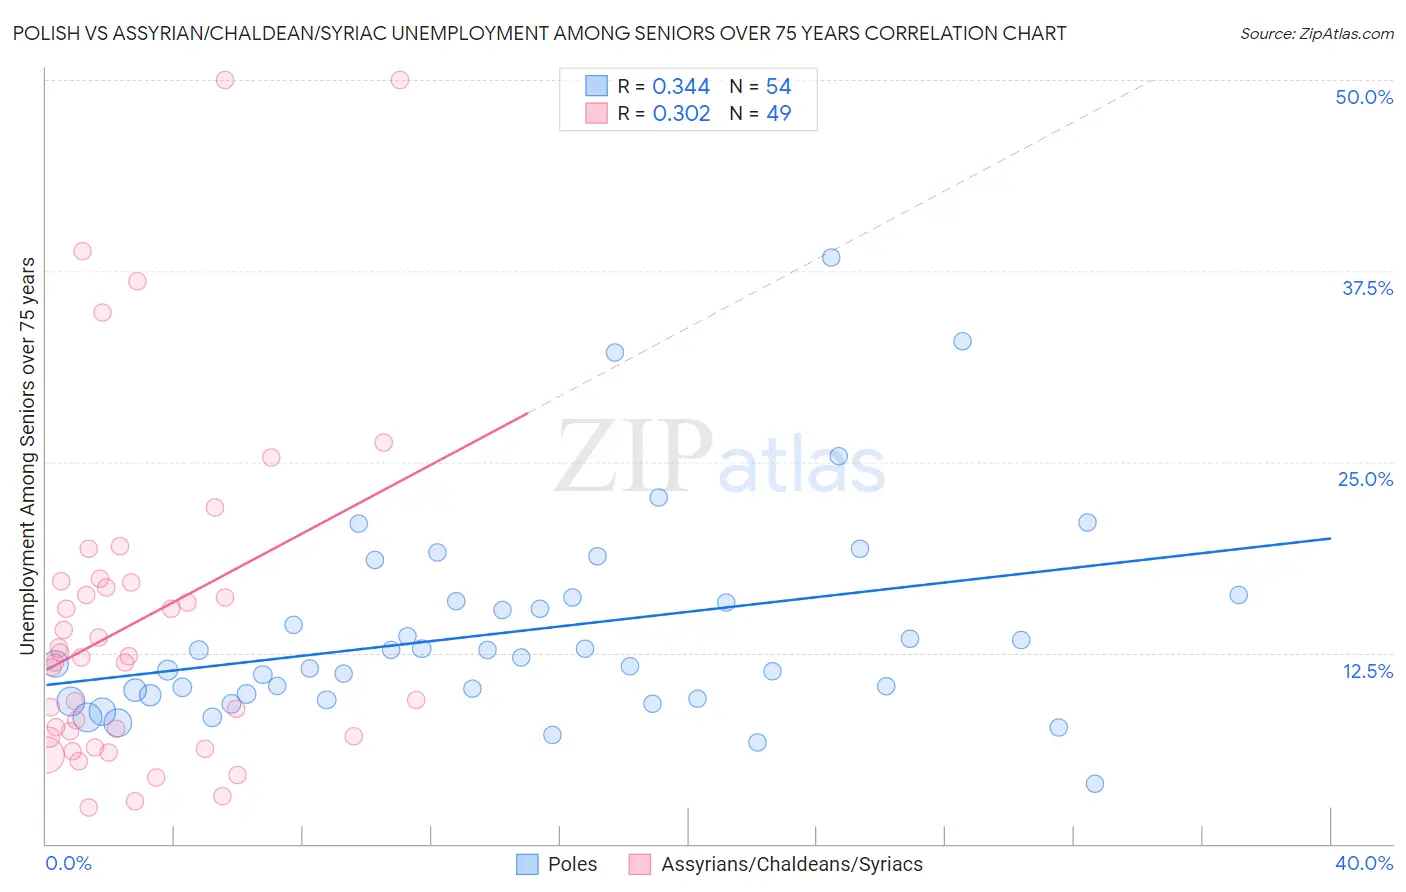 Polish vs Assyrian/Chaldean/Syriac Unemployment Among Seniors over 75 years